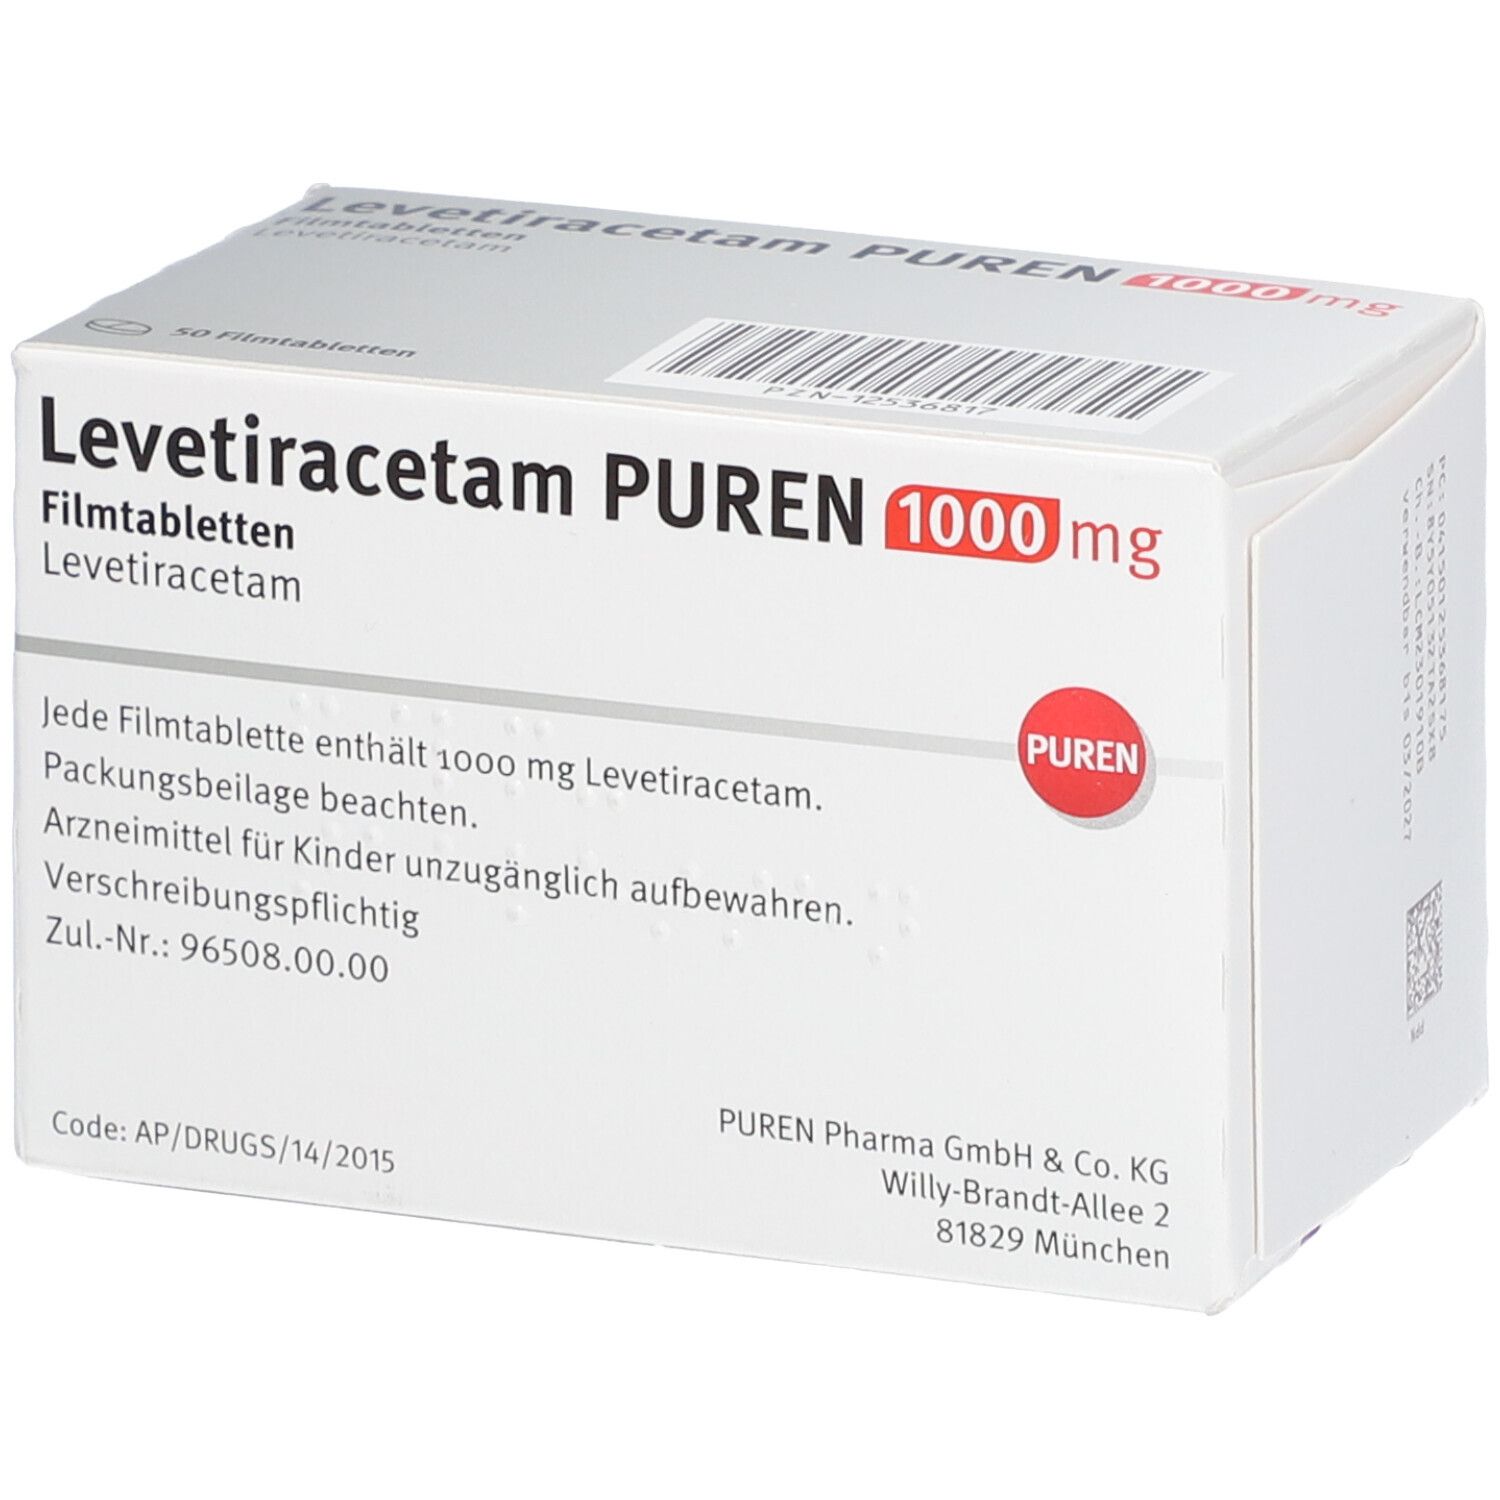 Levetiracetam PUREN 1000 mg